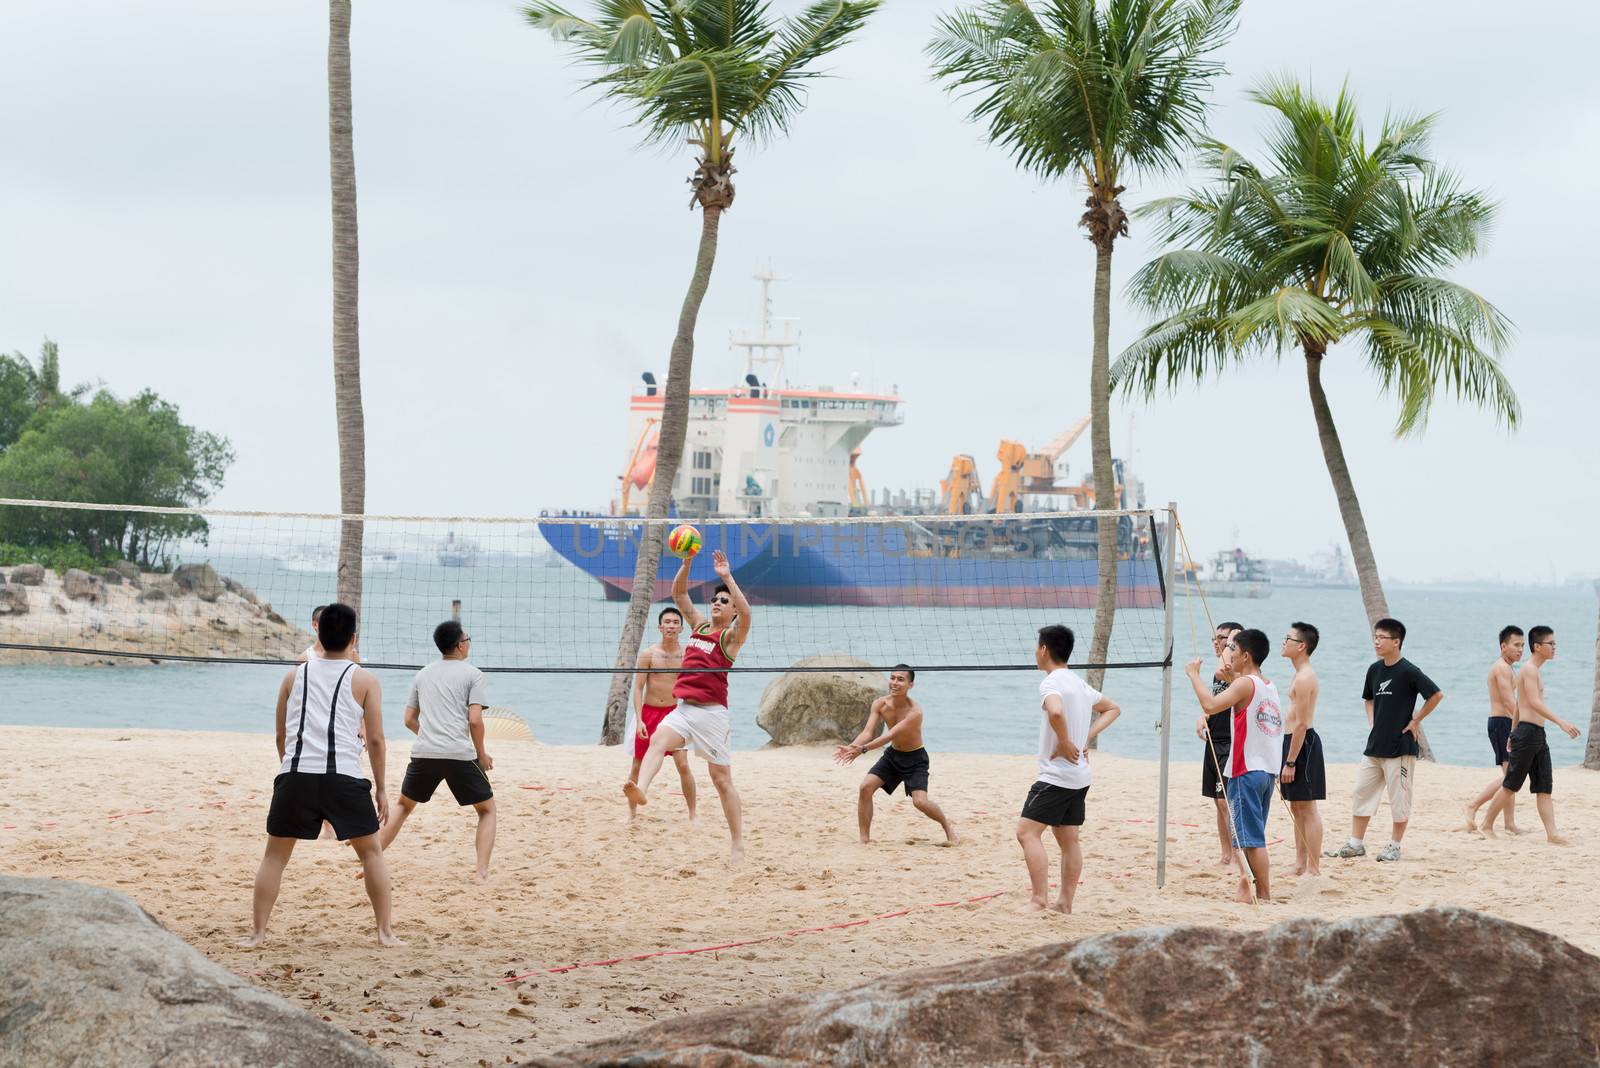 Group of men play volleyball on beach by iryna_rasko